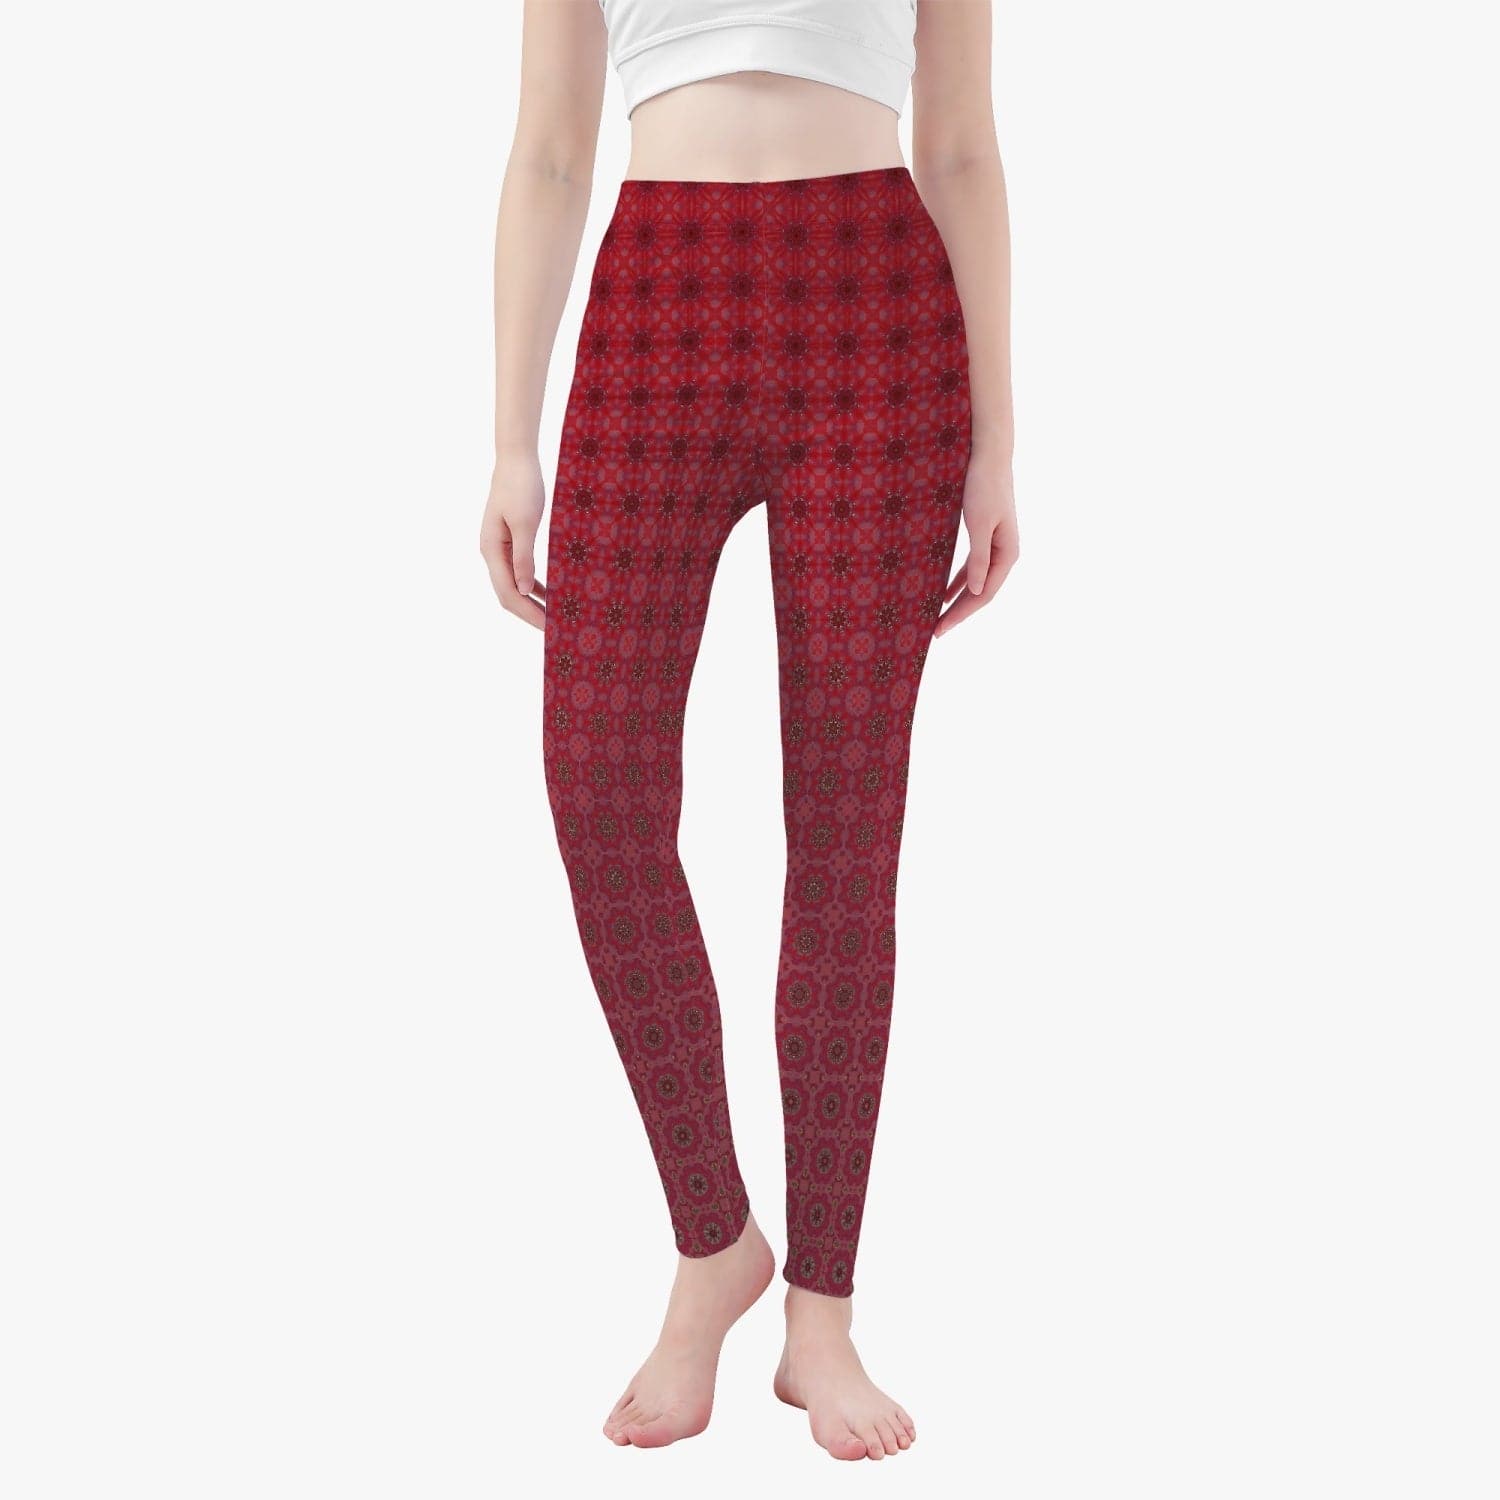 Red Wine fine rosy pattern StylishYoga Pants/Leggings for women, by Sensus Studio Design